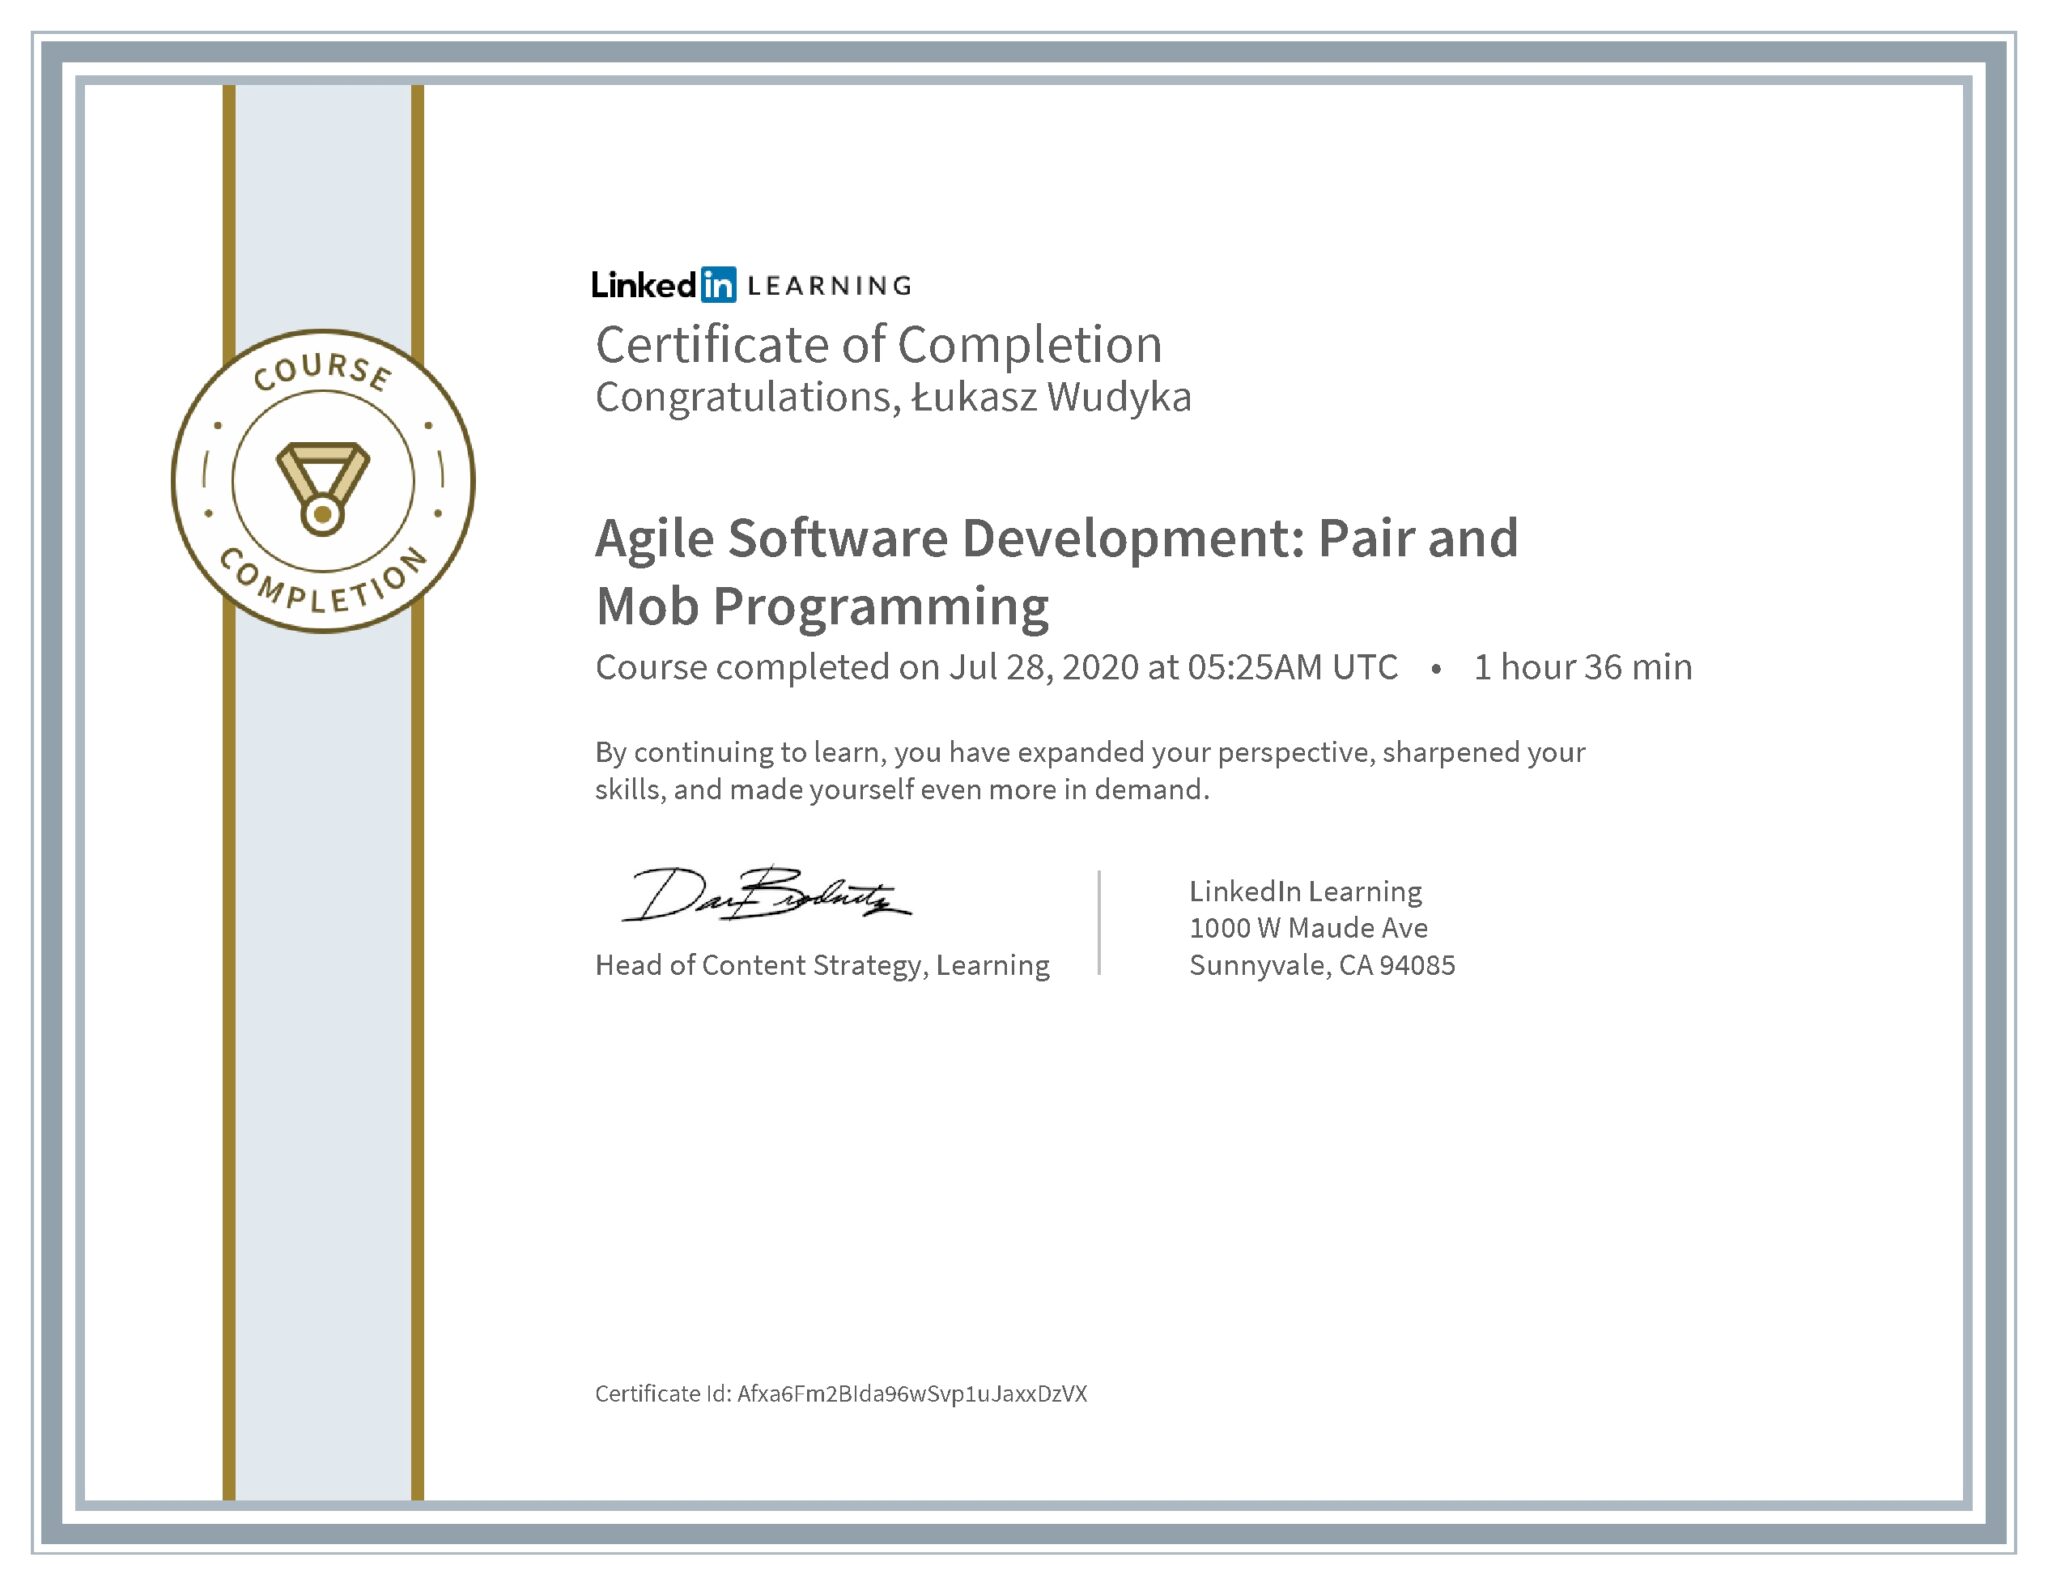 Łukasz Wudyka certyfikat LinkedIn Agile Software Development: Pair and Mob Programming